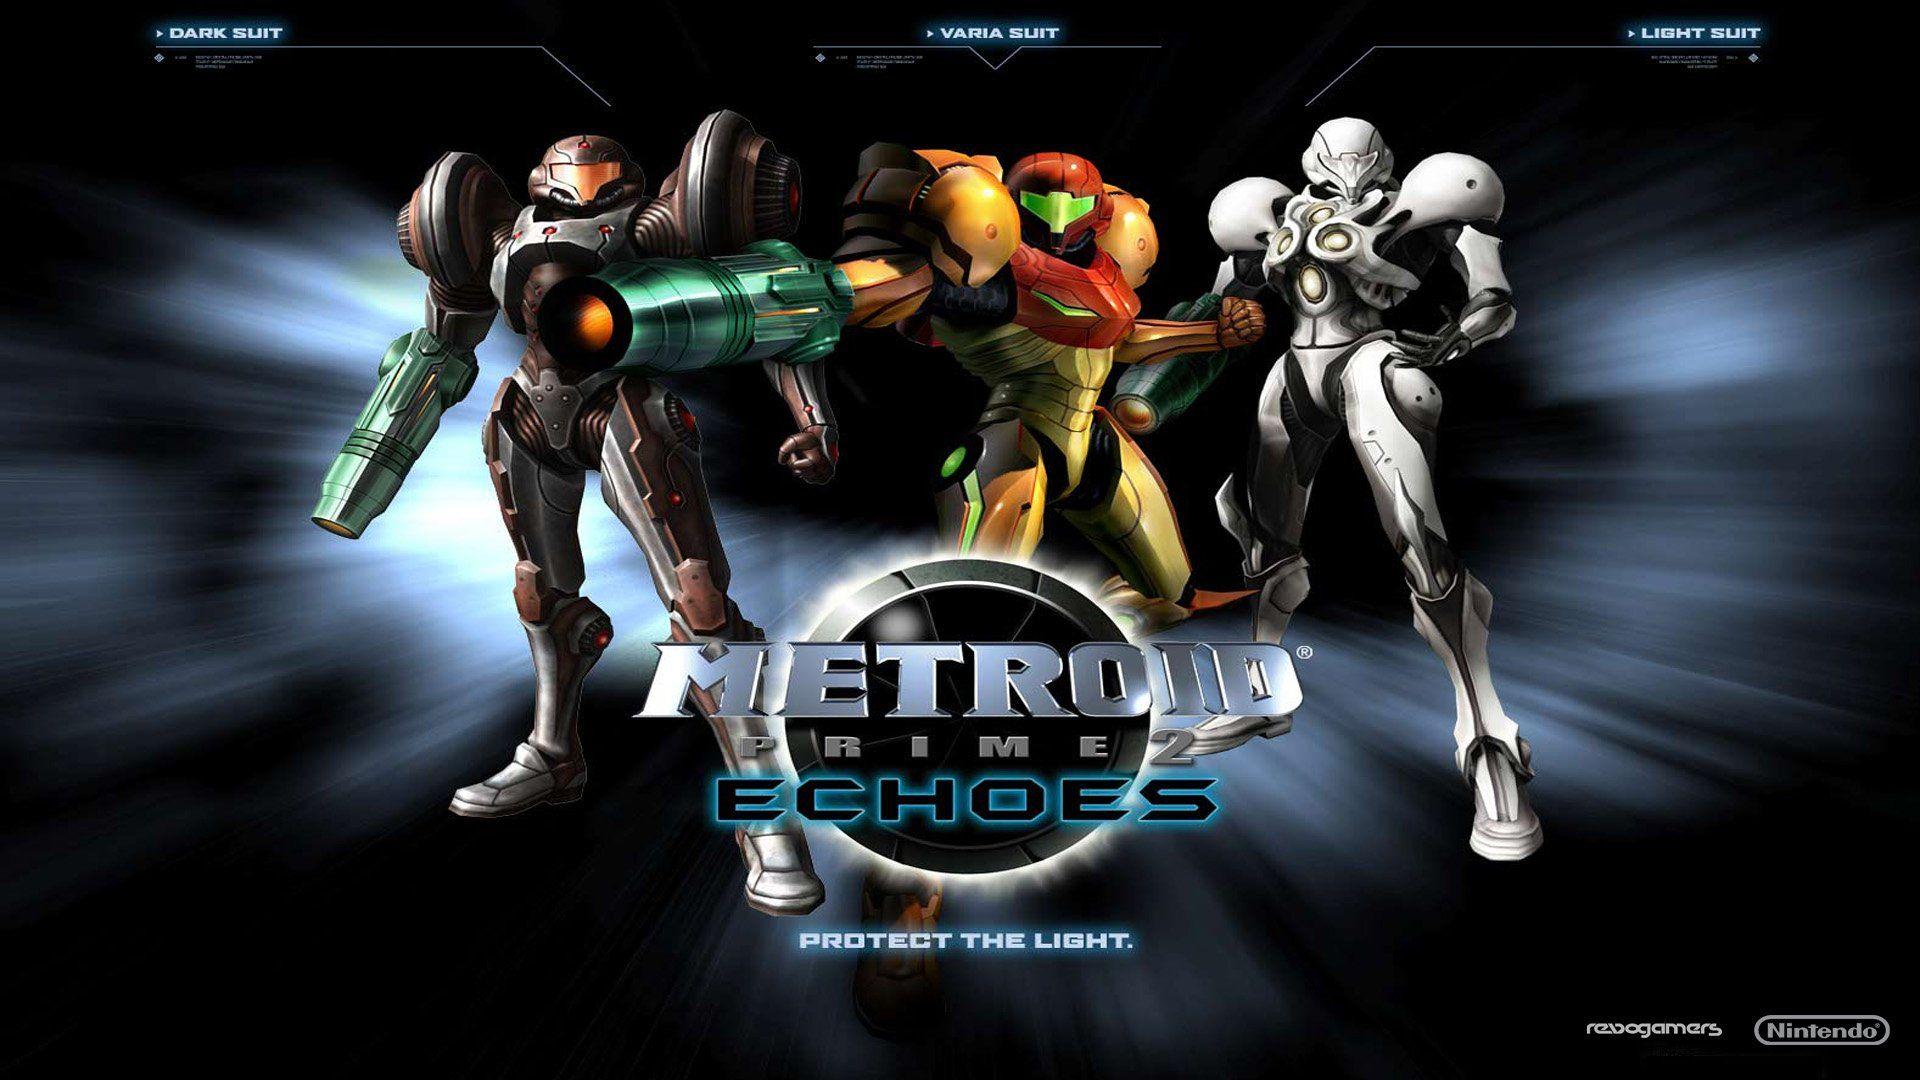 Metroid Prime 2: Echoes Full HD Bakgrund and Bakgrundx1080